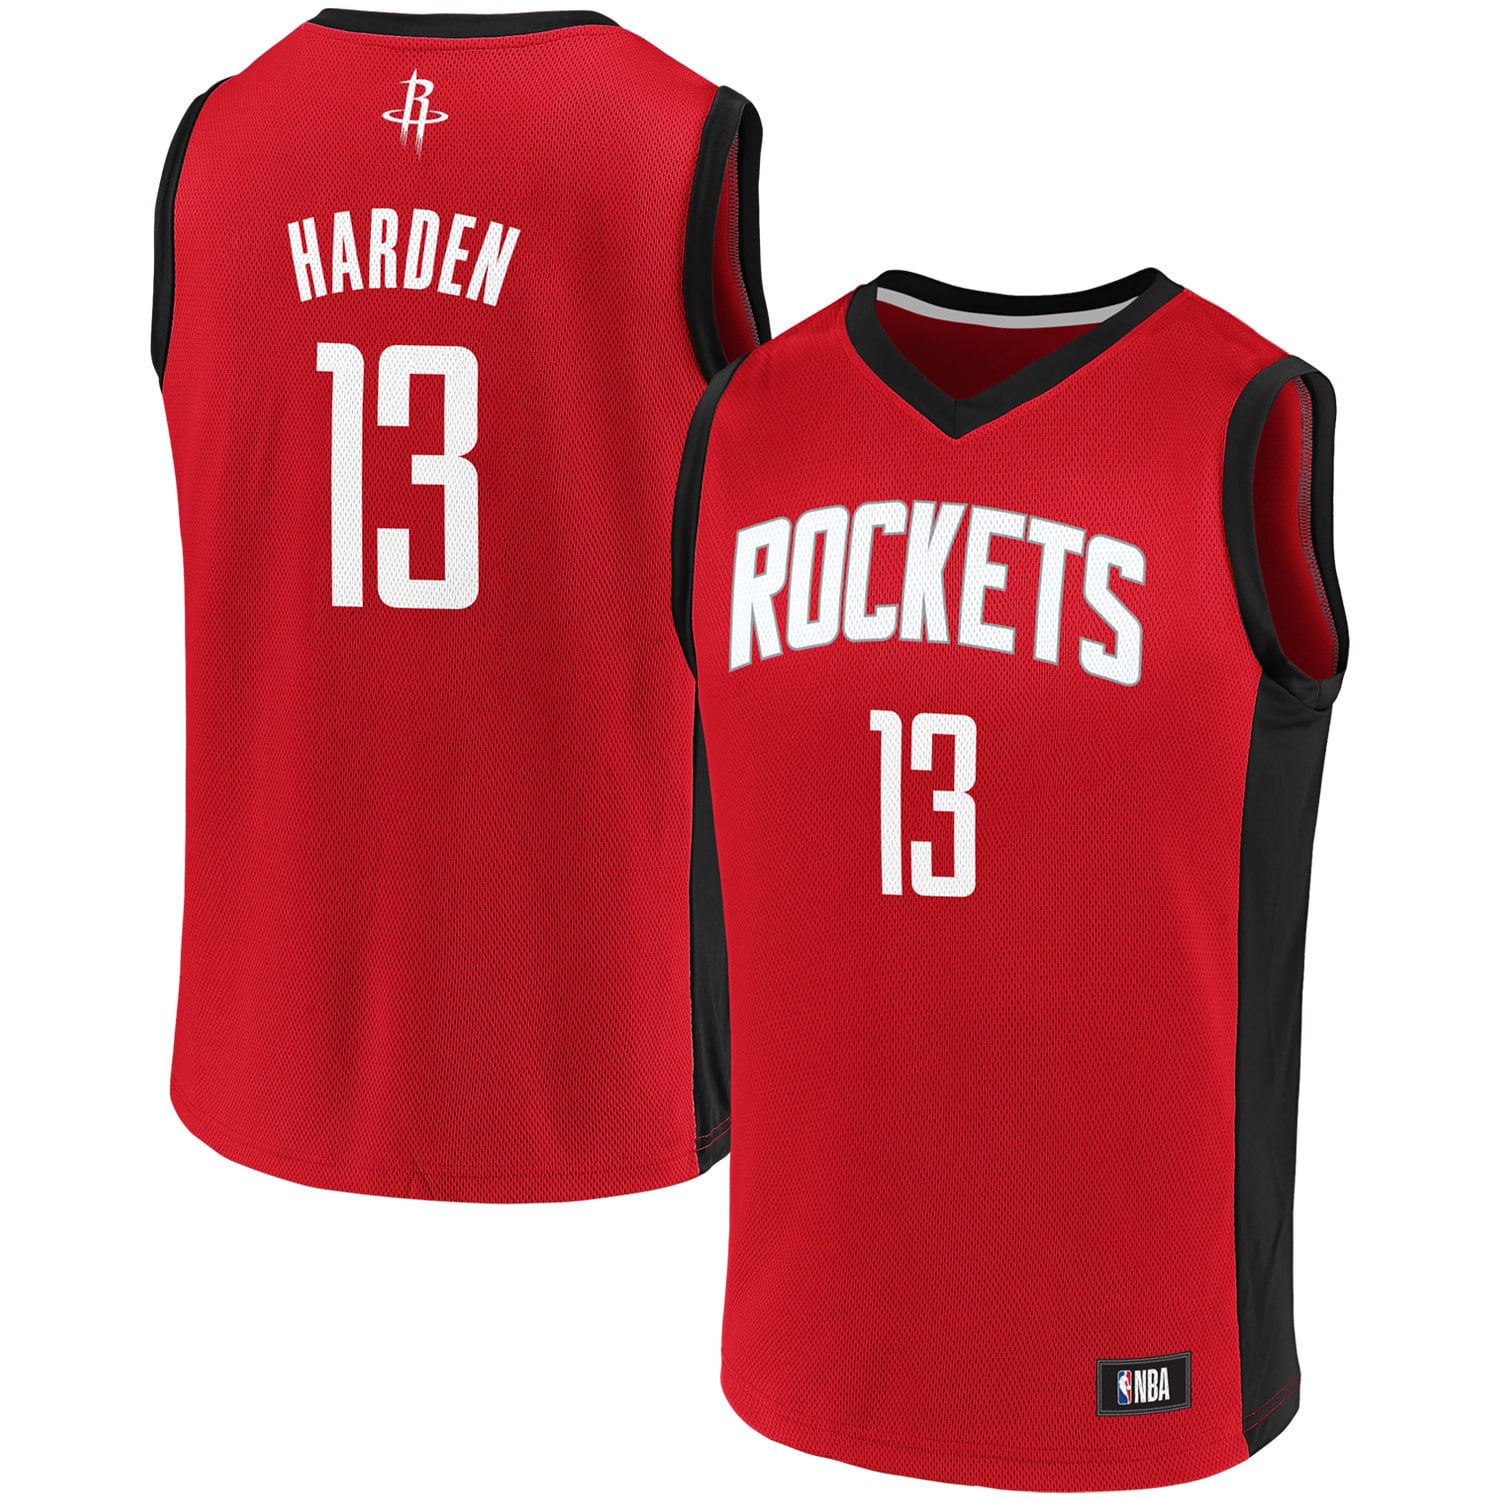 Black Gold Edition James Harden #13 Houston Rockets Basketball jersey Stitched 